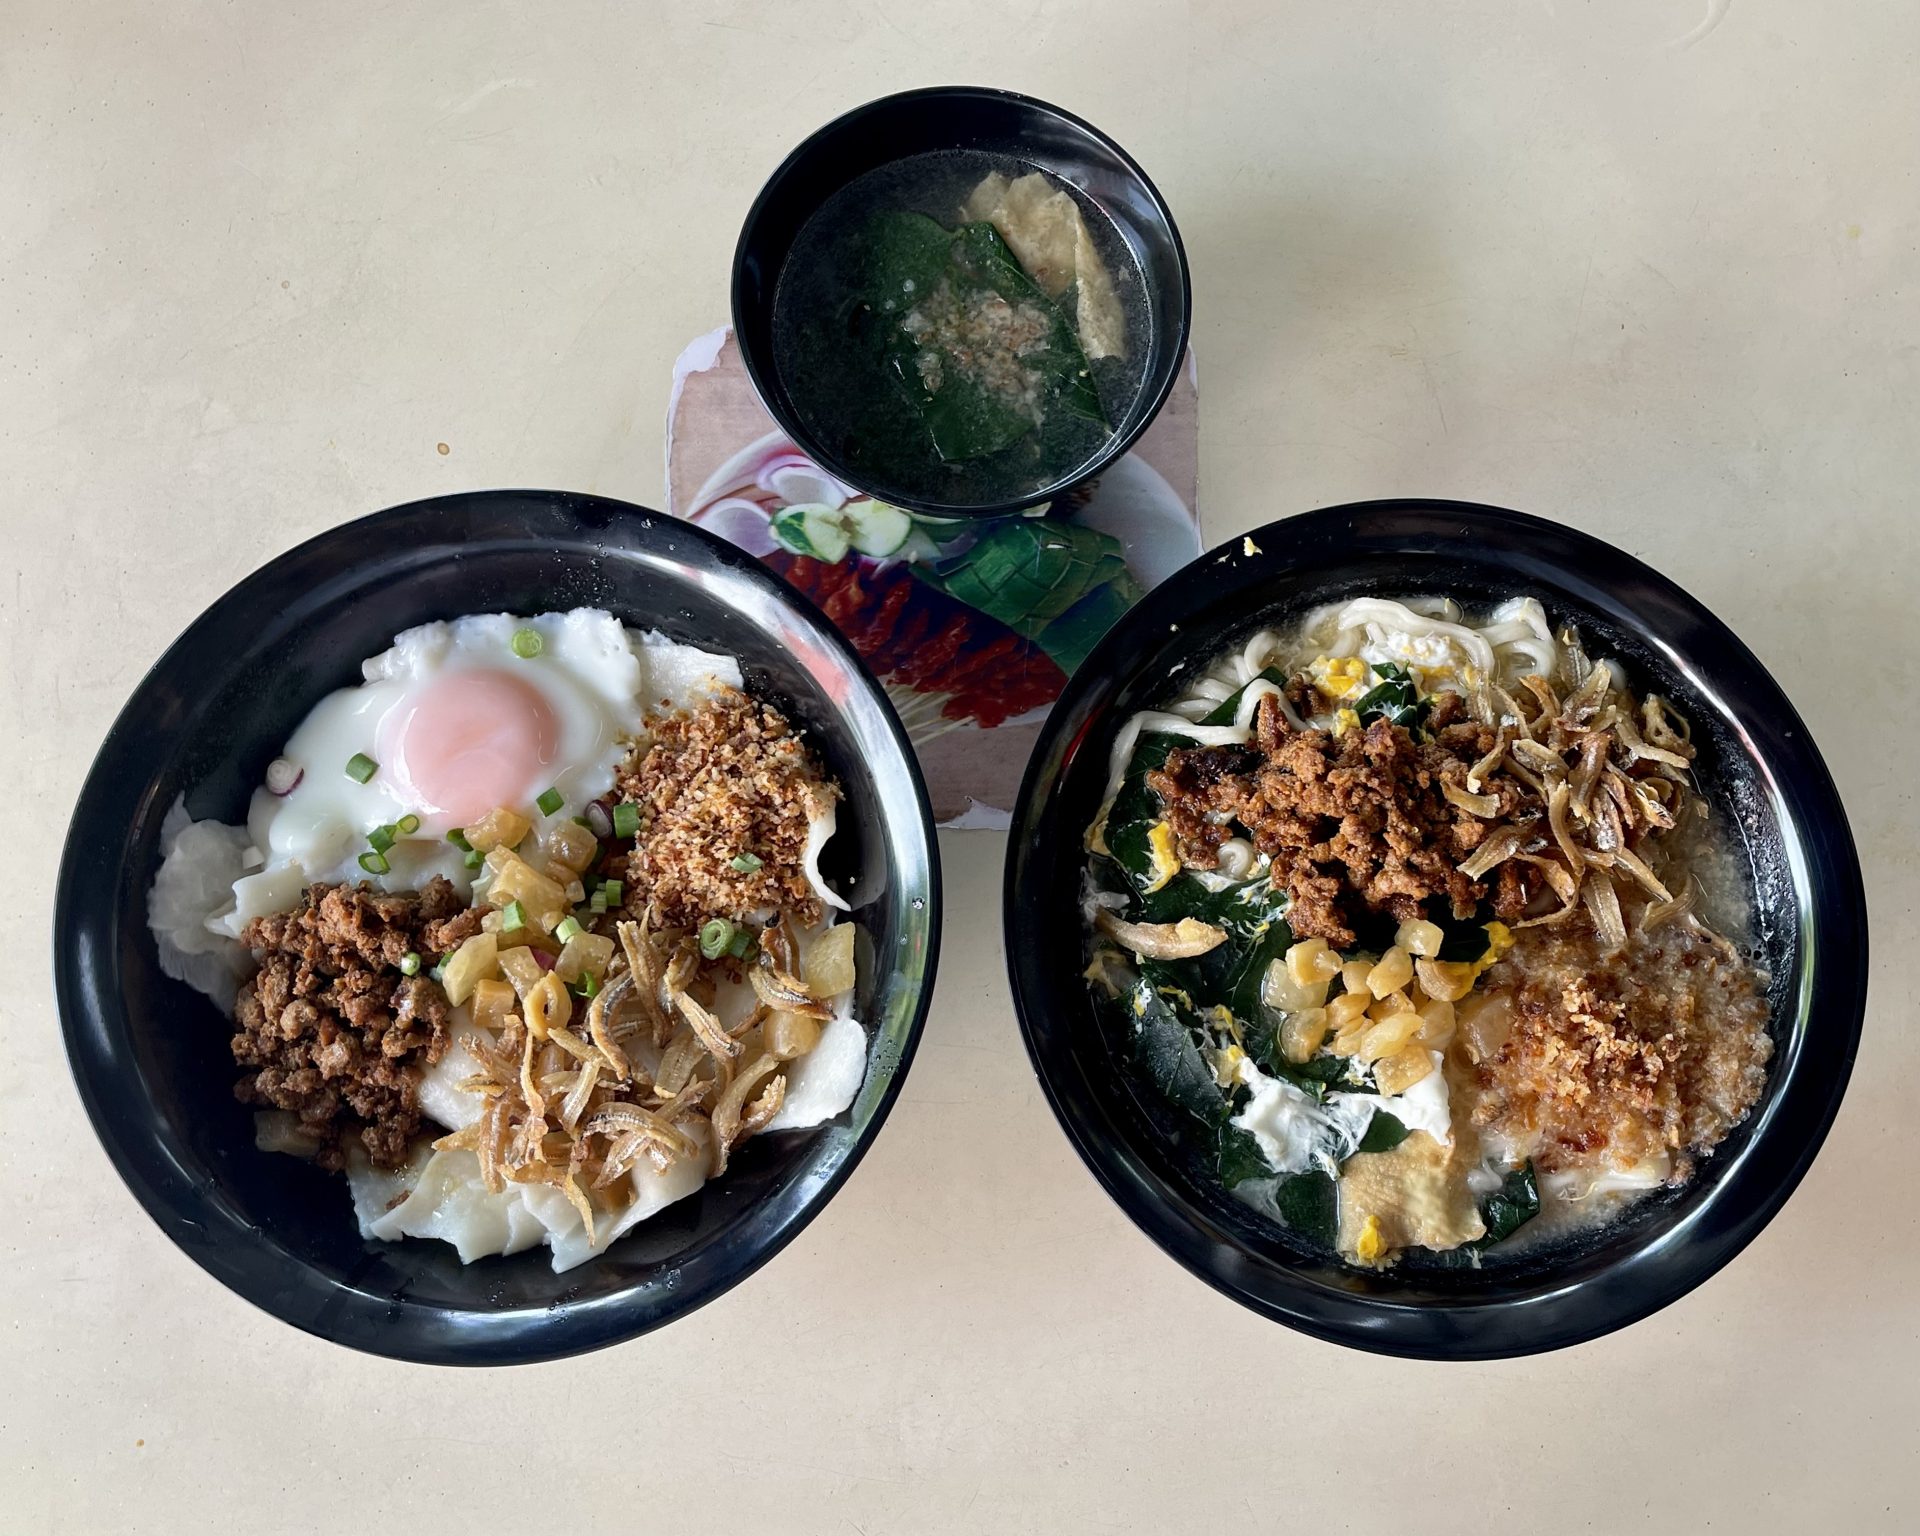 Penang Heng Heng Noodles - Noodle choices